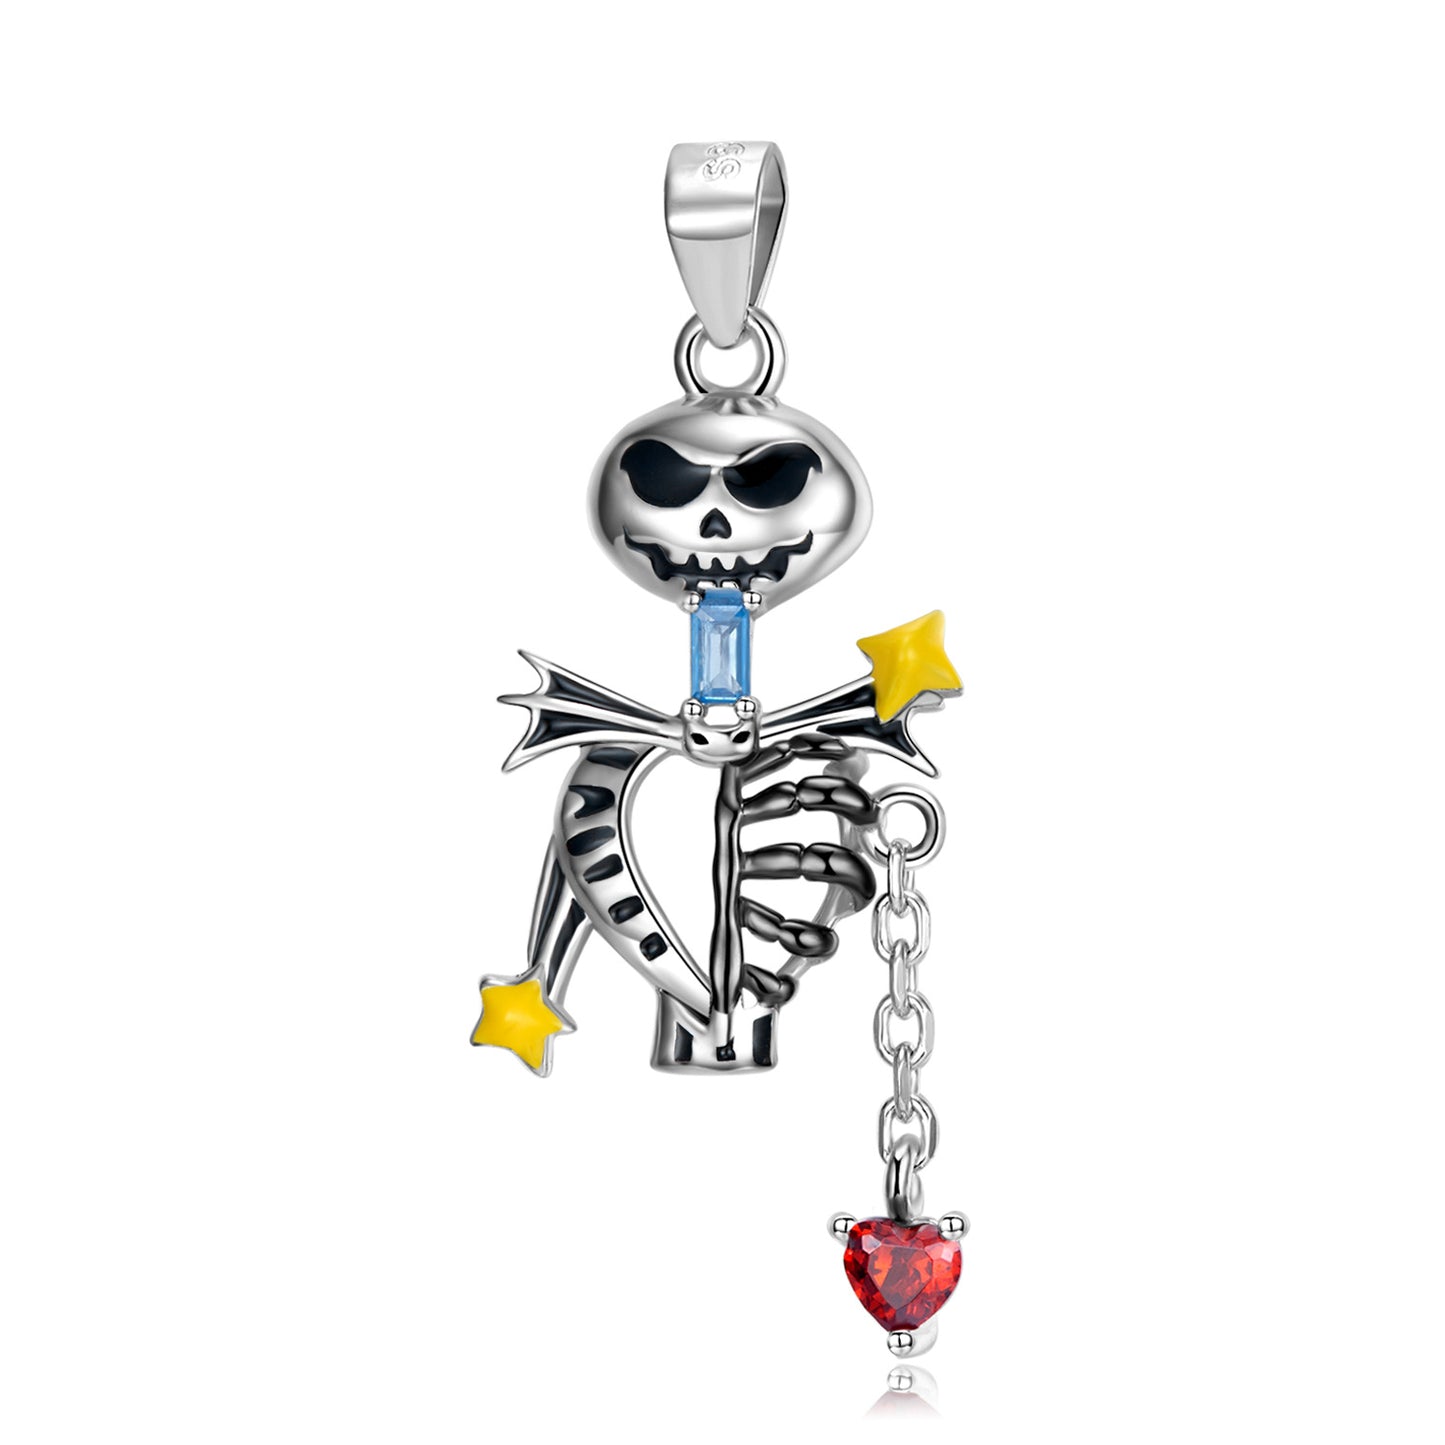 Sterling Silver Halloween Skeleton Pendant Necklace